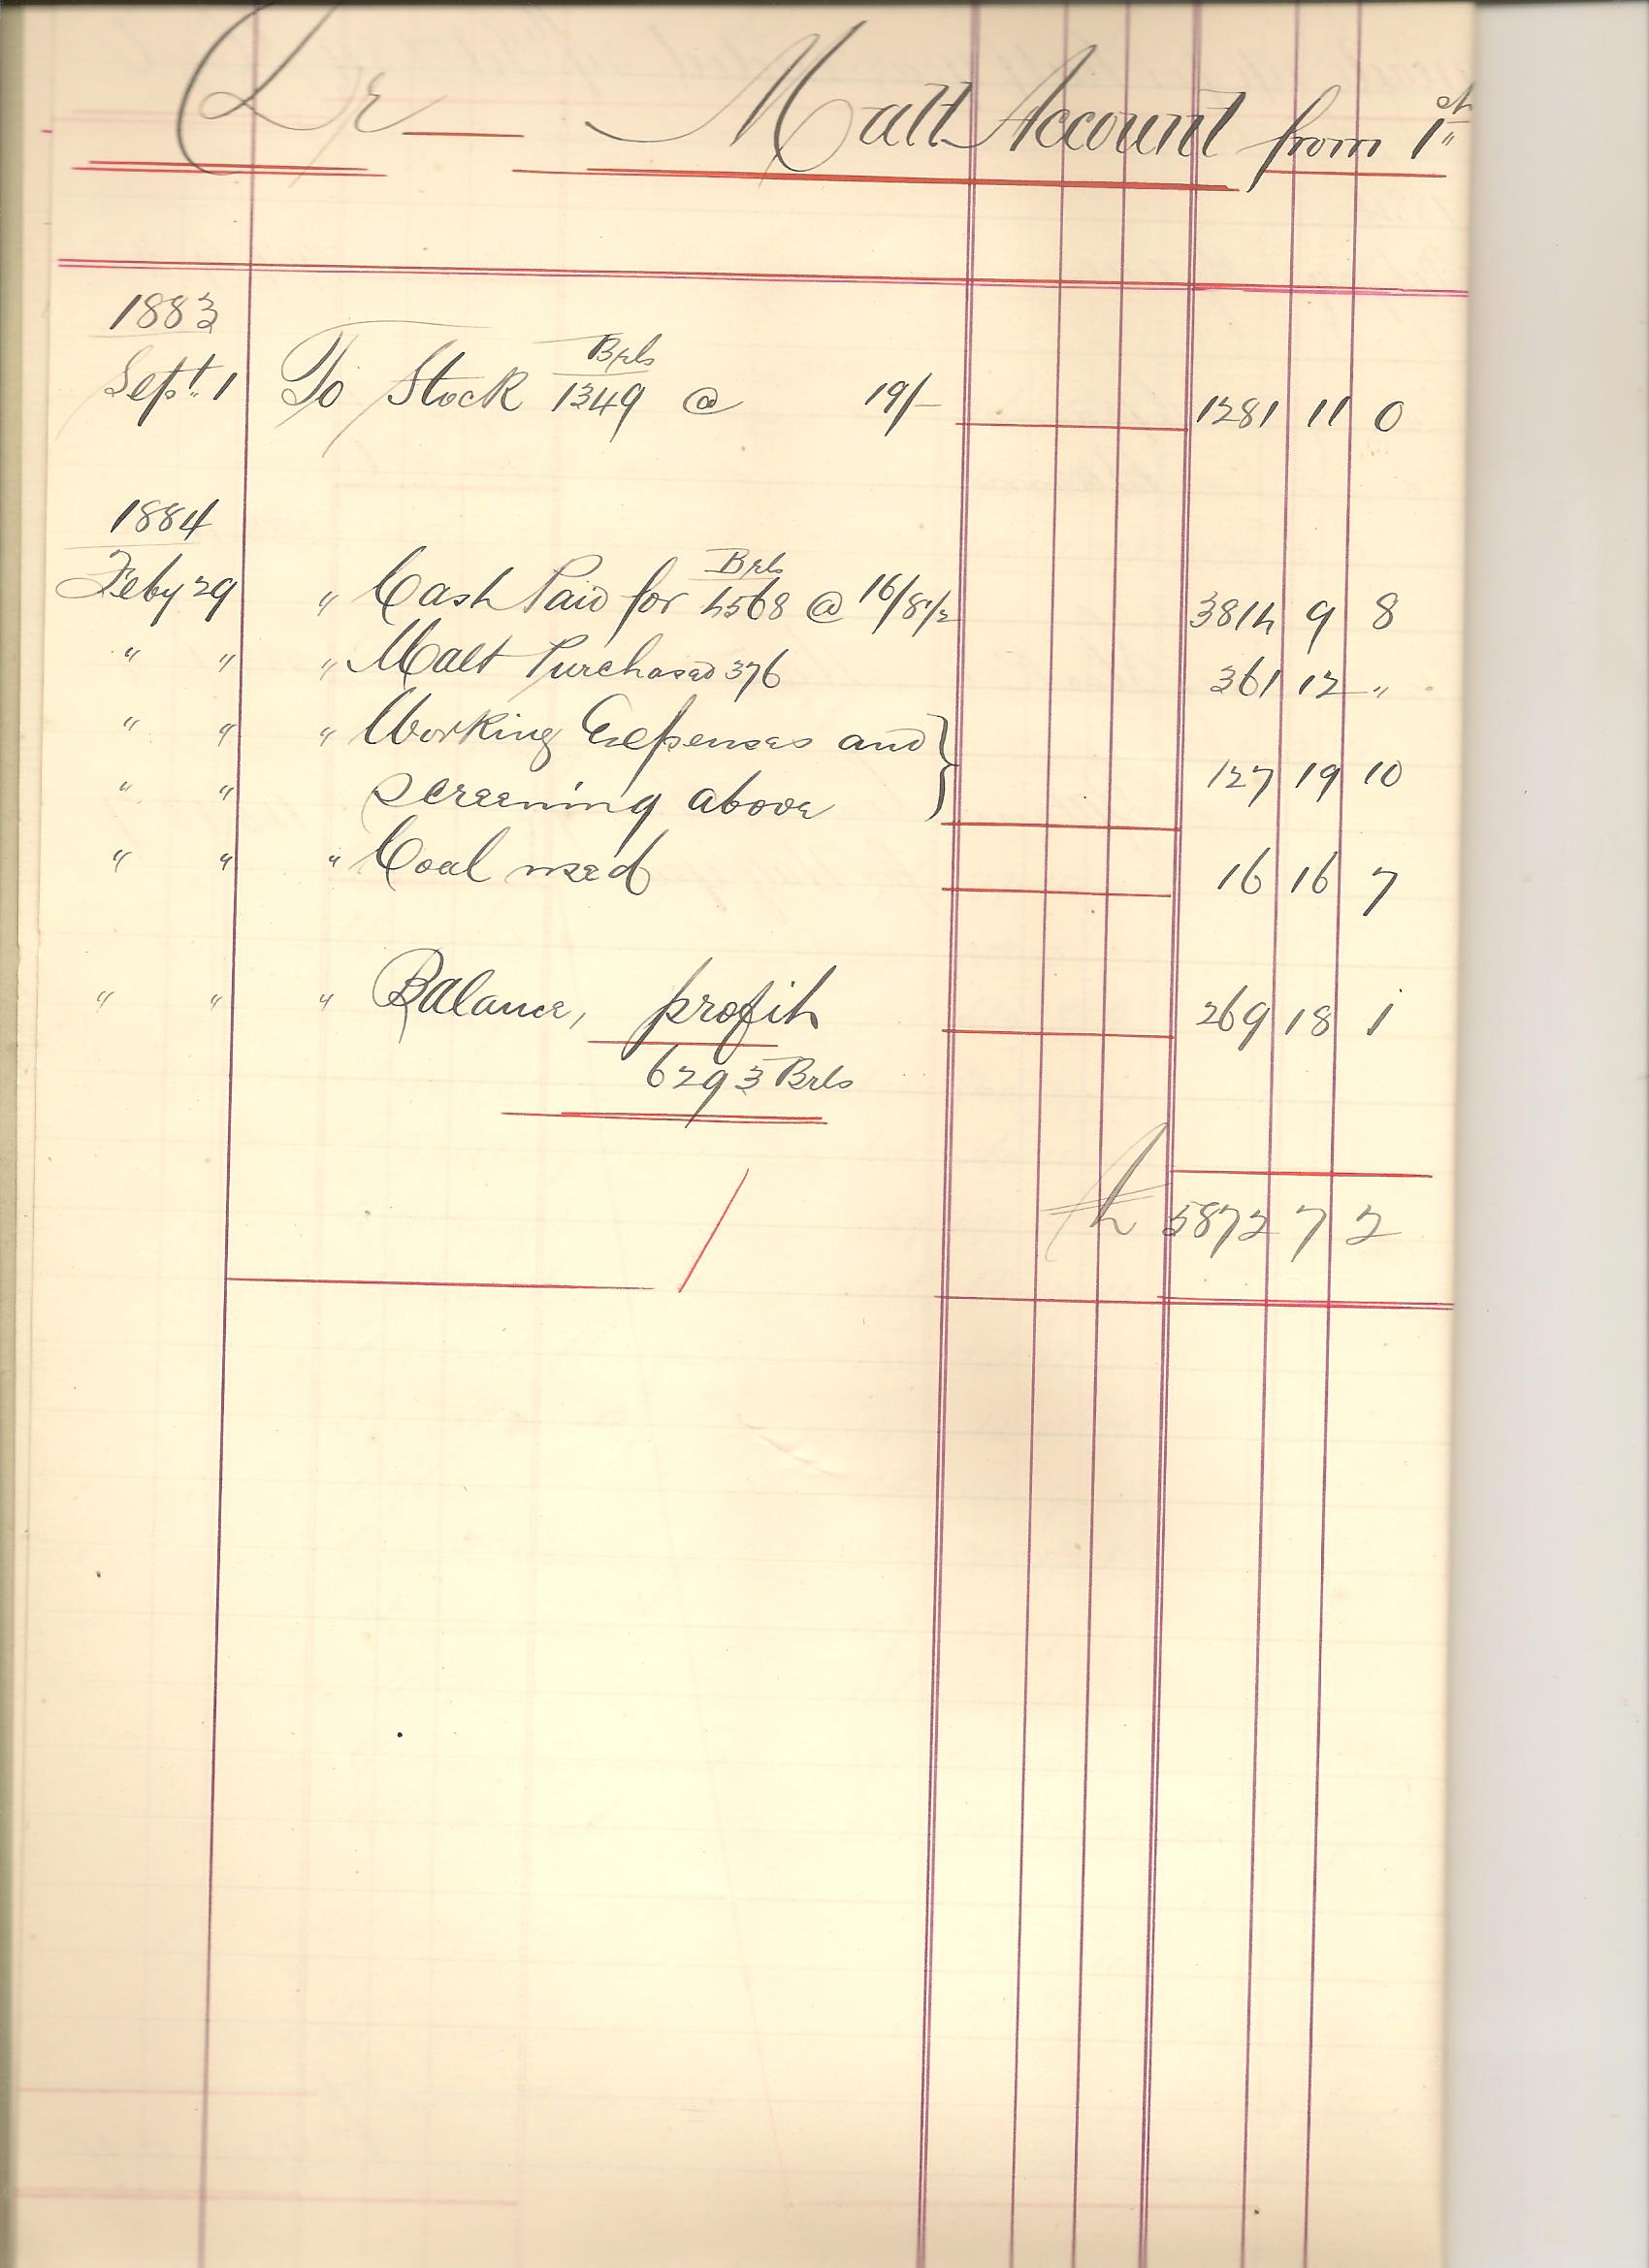 Macardle-Moore-Accounts-29th-Feb-1884